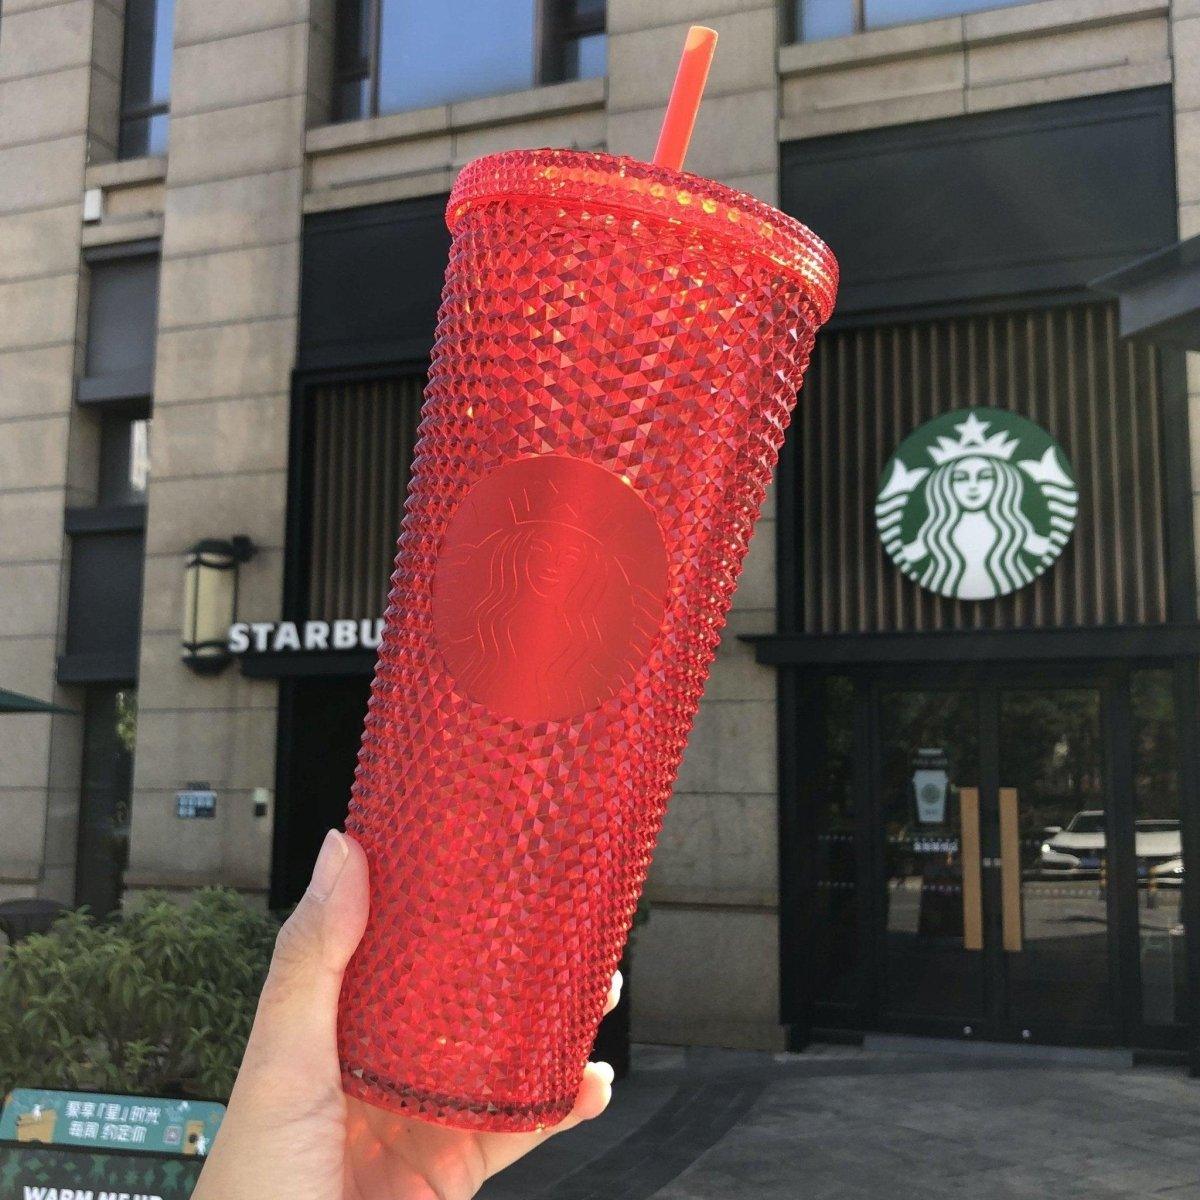 Starbucks China Red Studded Tumbler Cup - Ann Ann Starbucks